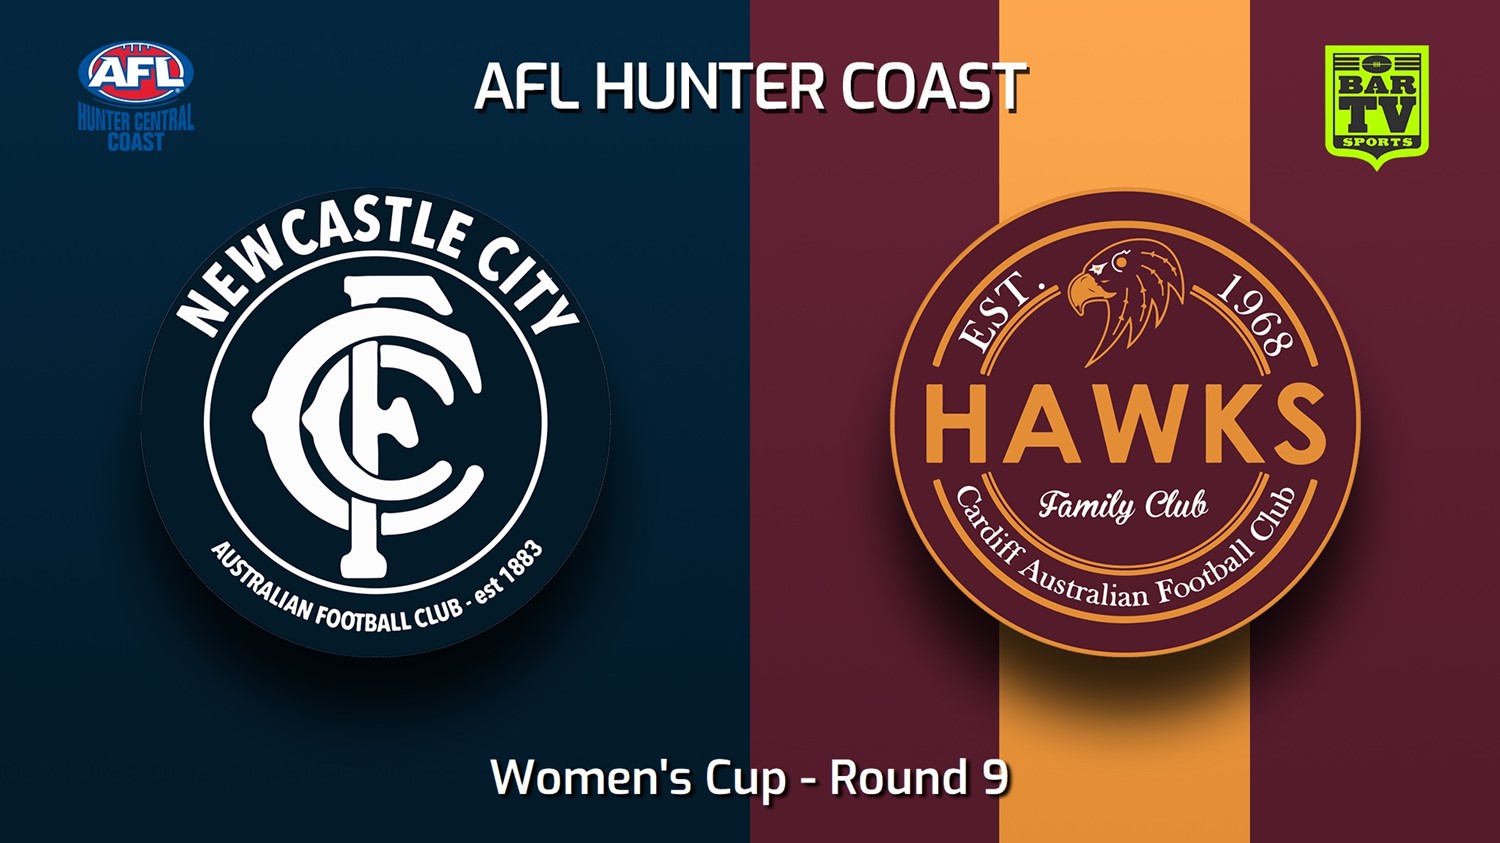 230603-AFL Hunter Central Coast Round 9 - Women's Cup - Newcastle City  v Cardiff Hawks Minigame Slate Image